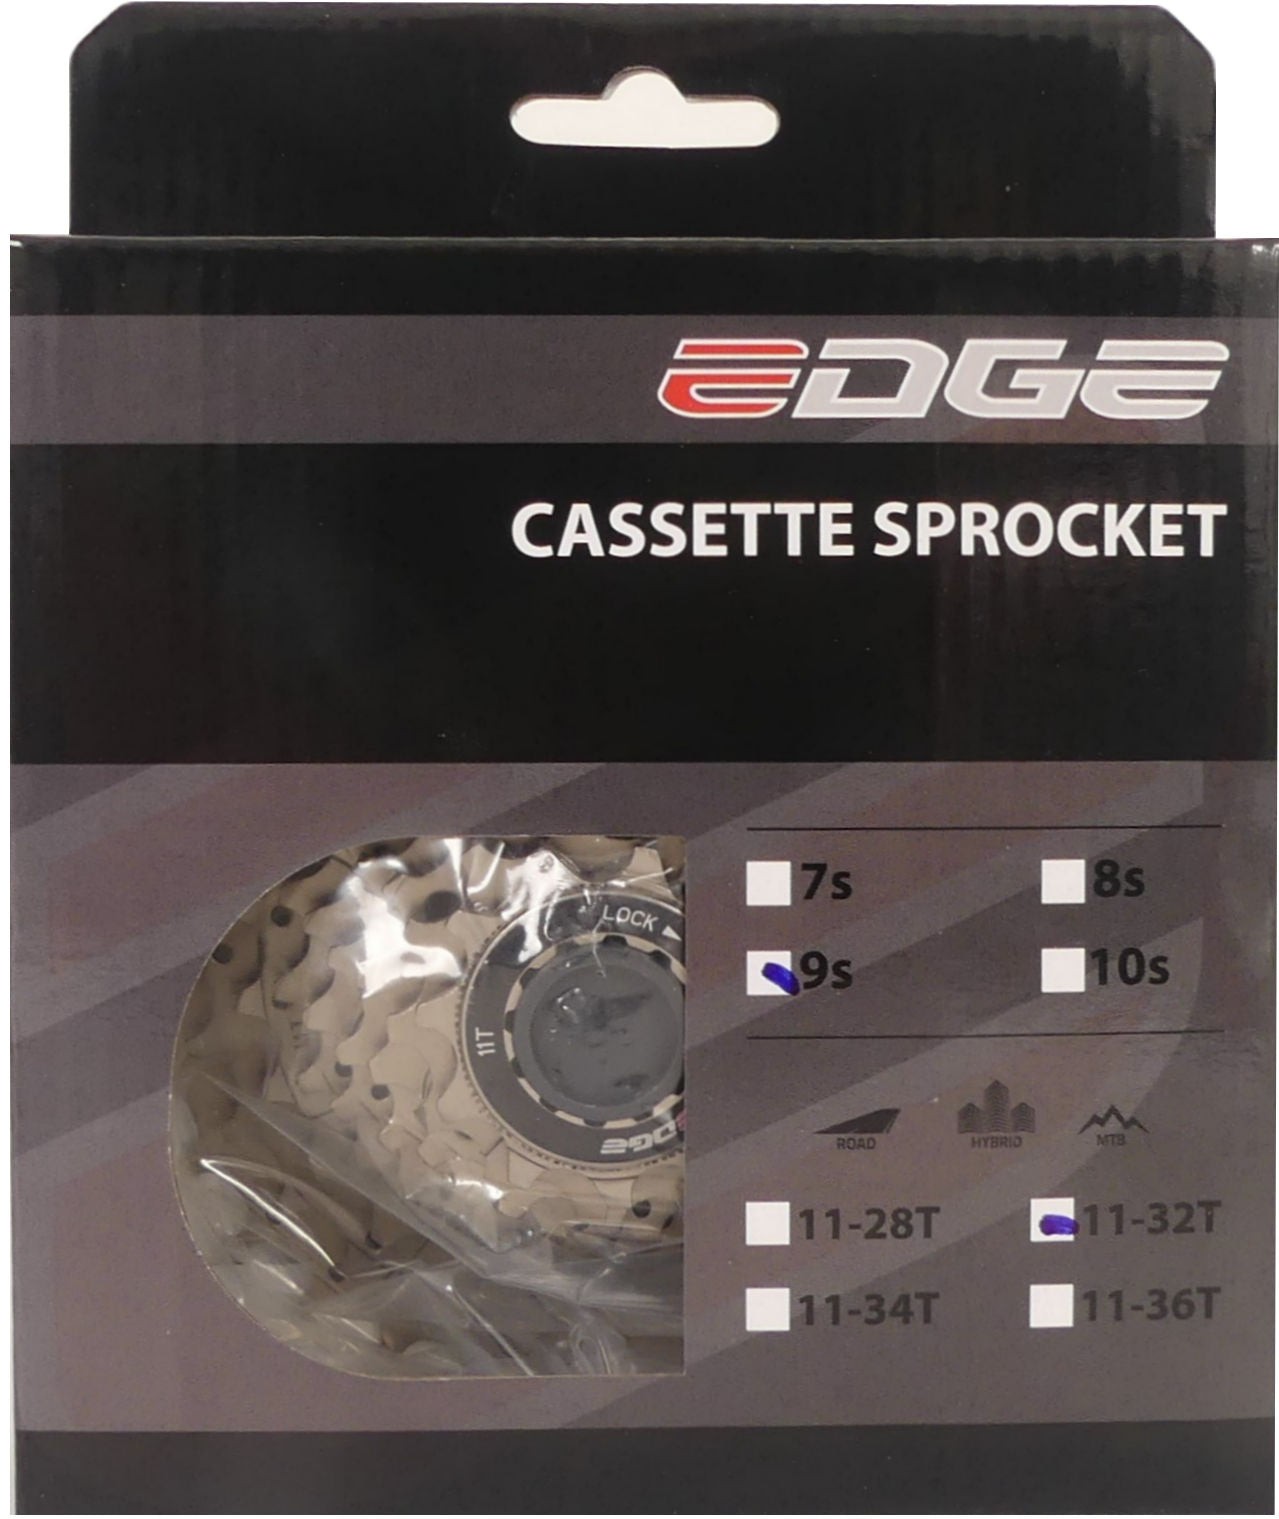 Cassette 9 speed Edge CSM5009 11-32T - silver